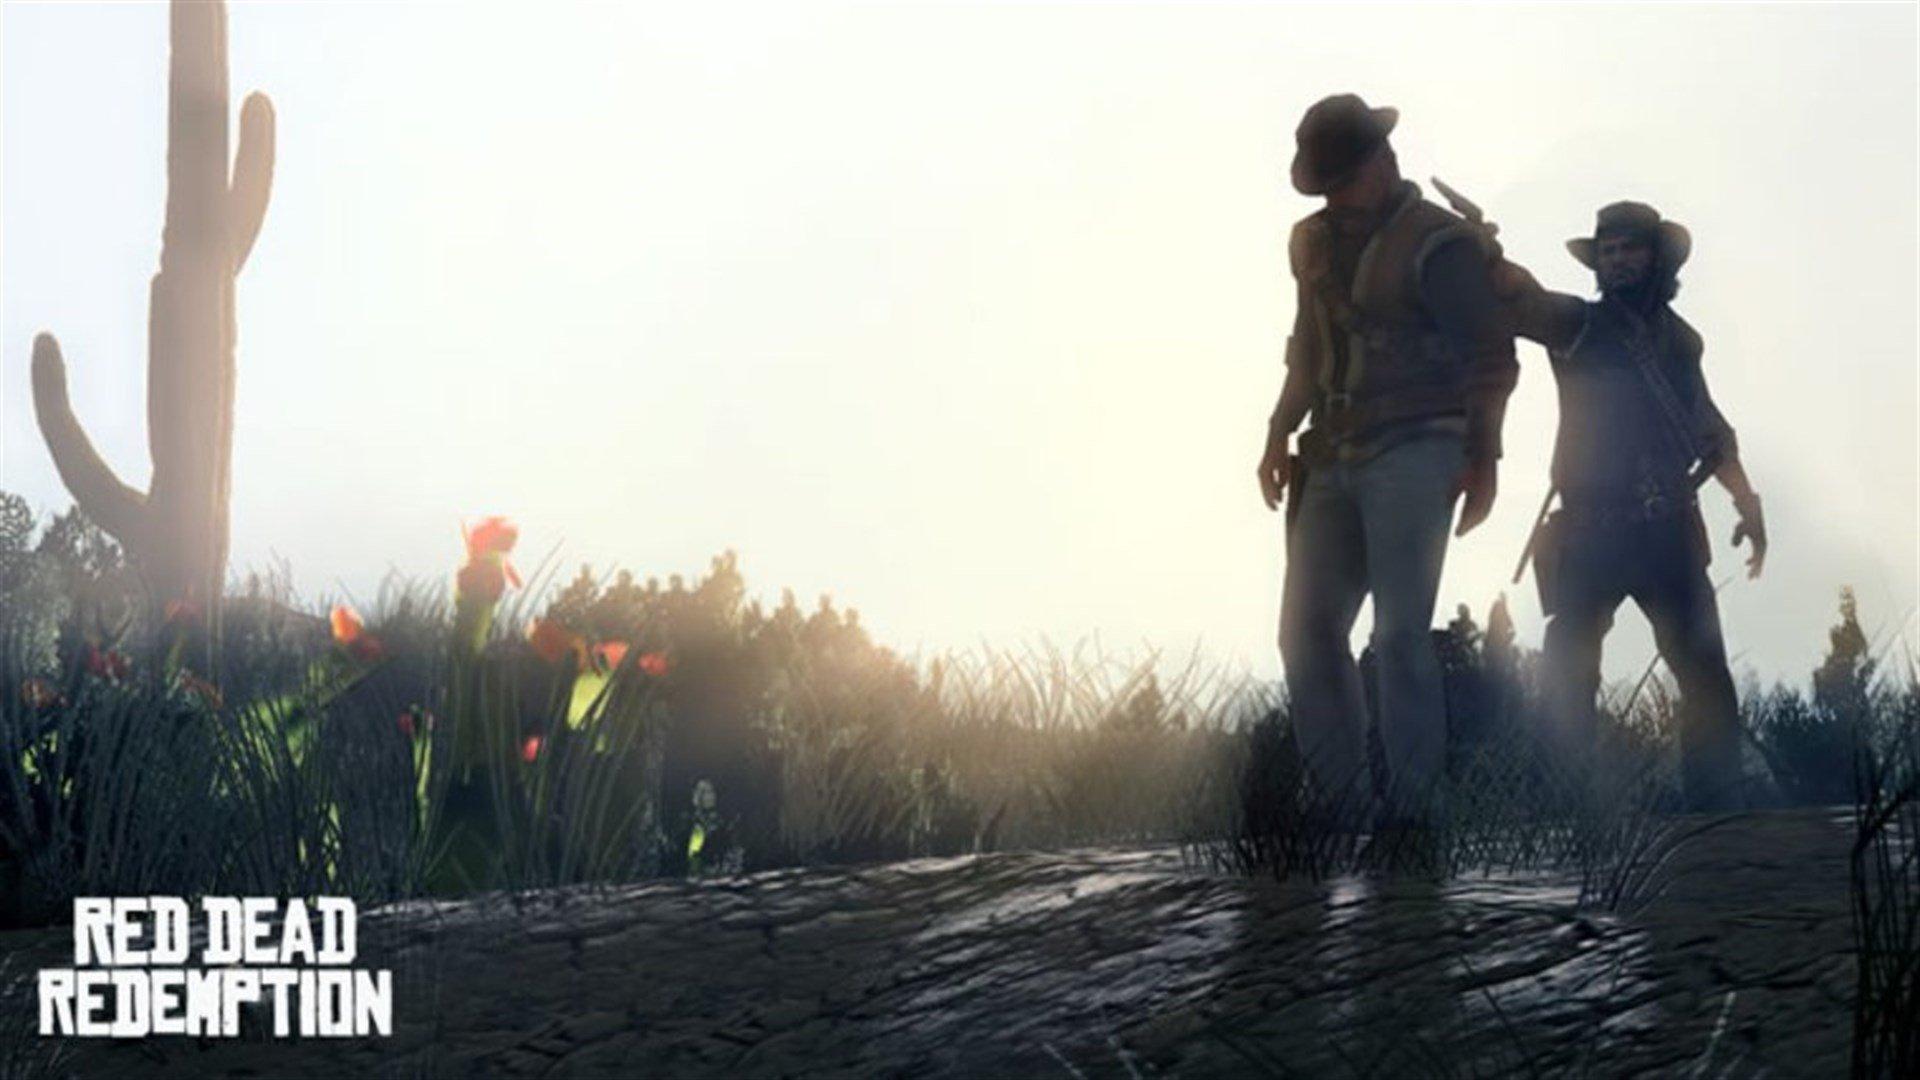 Red Dead Redemption Game of The Year Edition - PS3 - Mídia Física - VNS  Games - Seu próximo jogo está aqui!